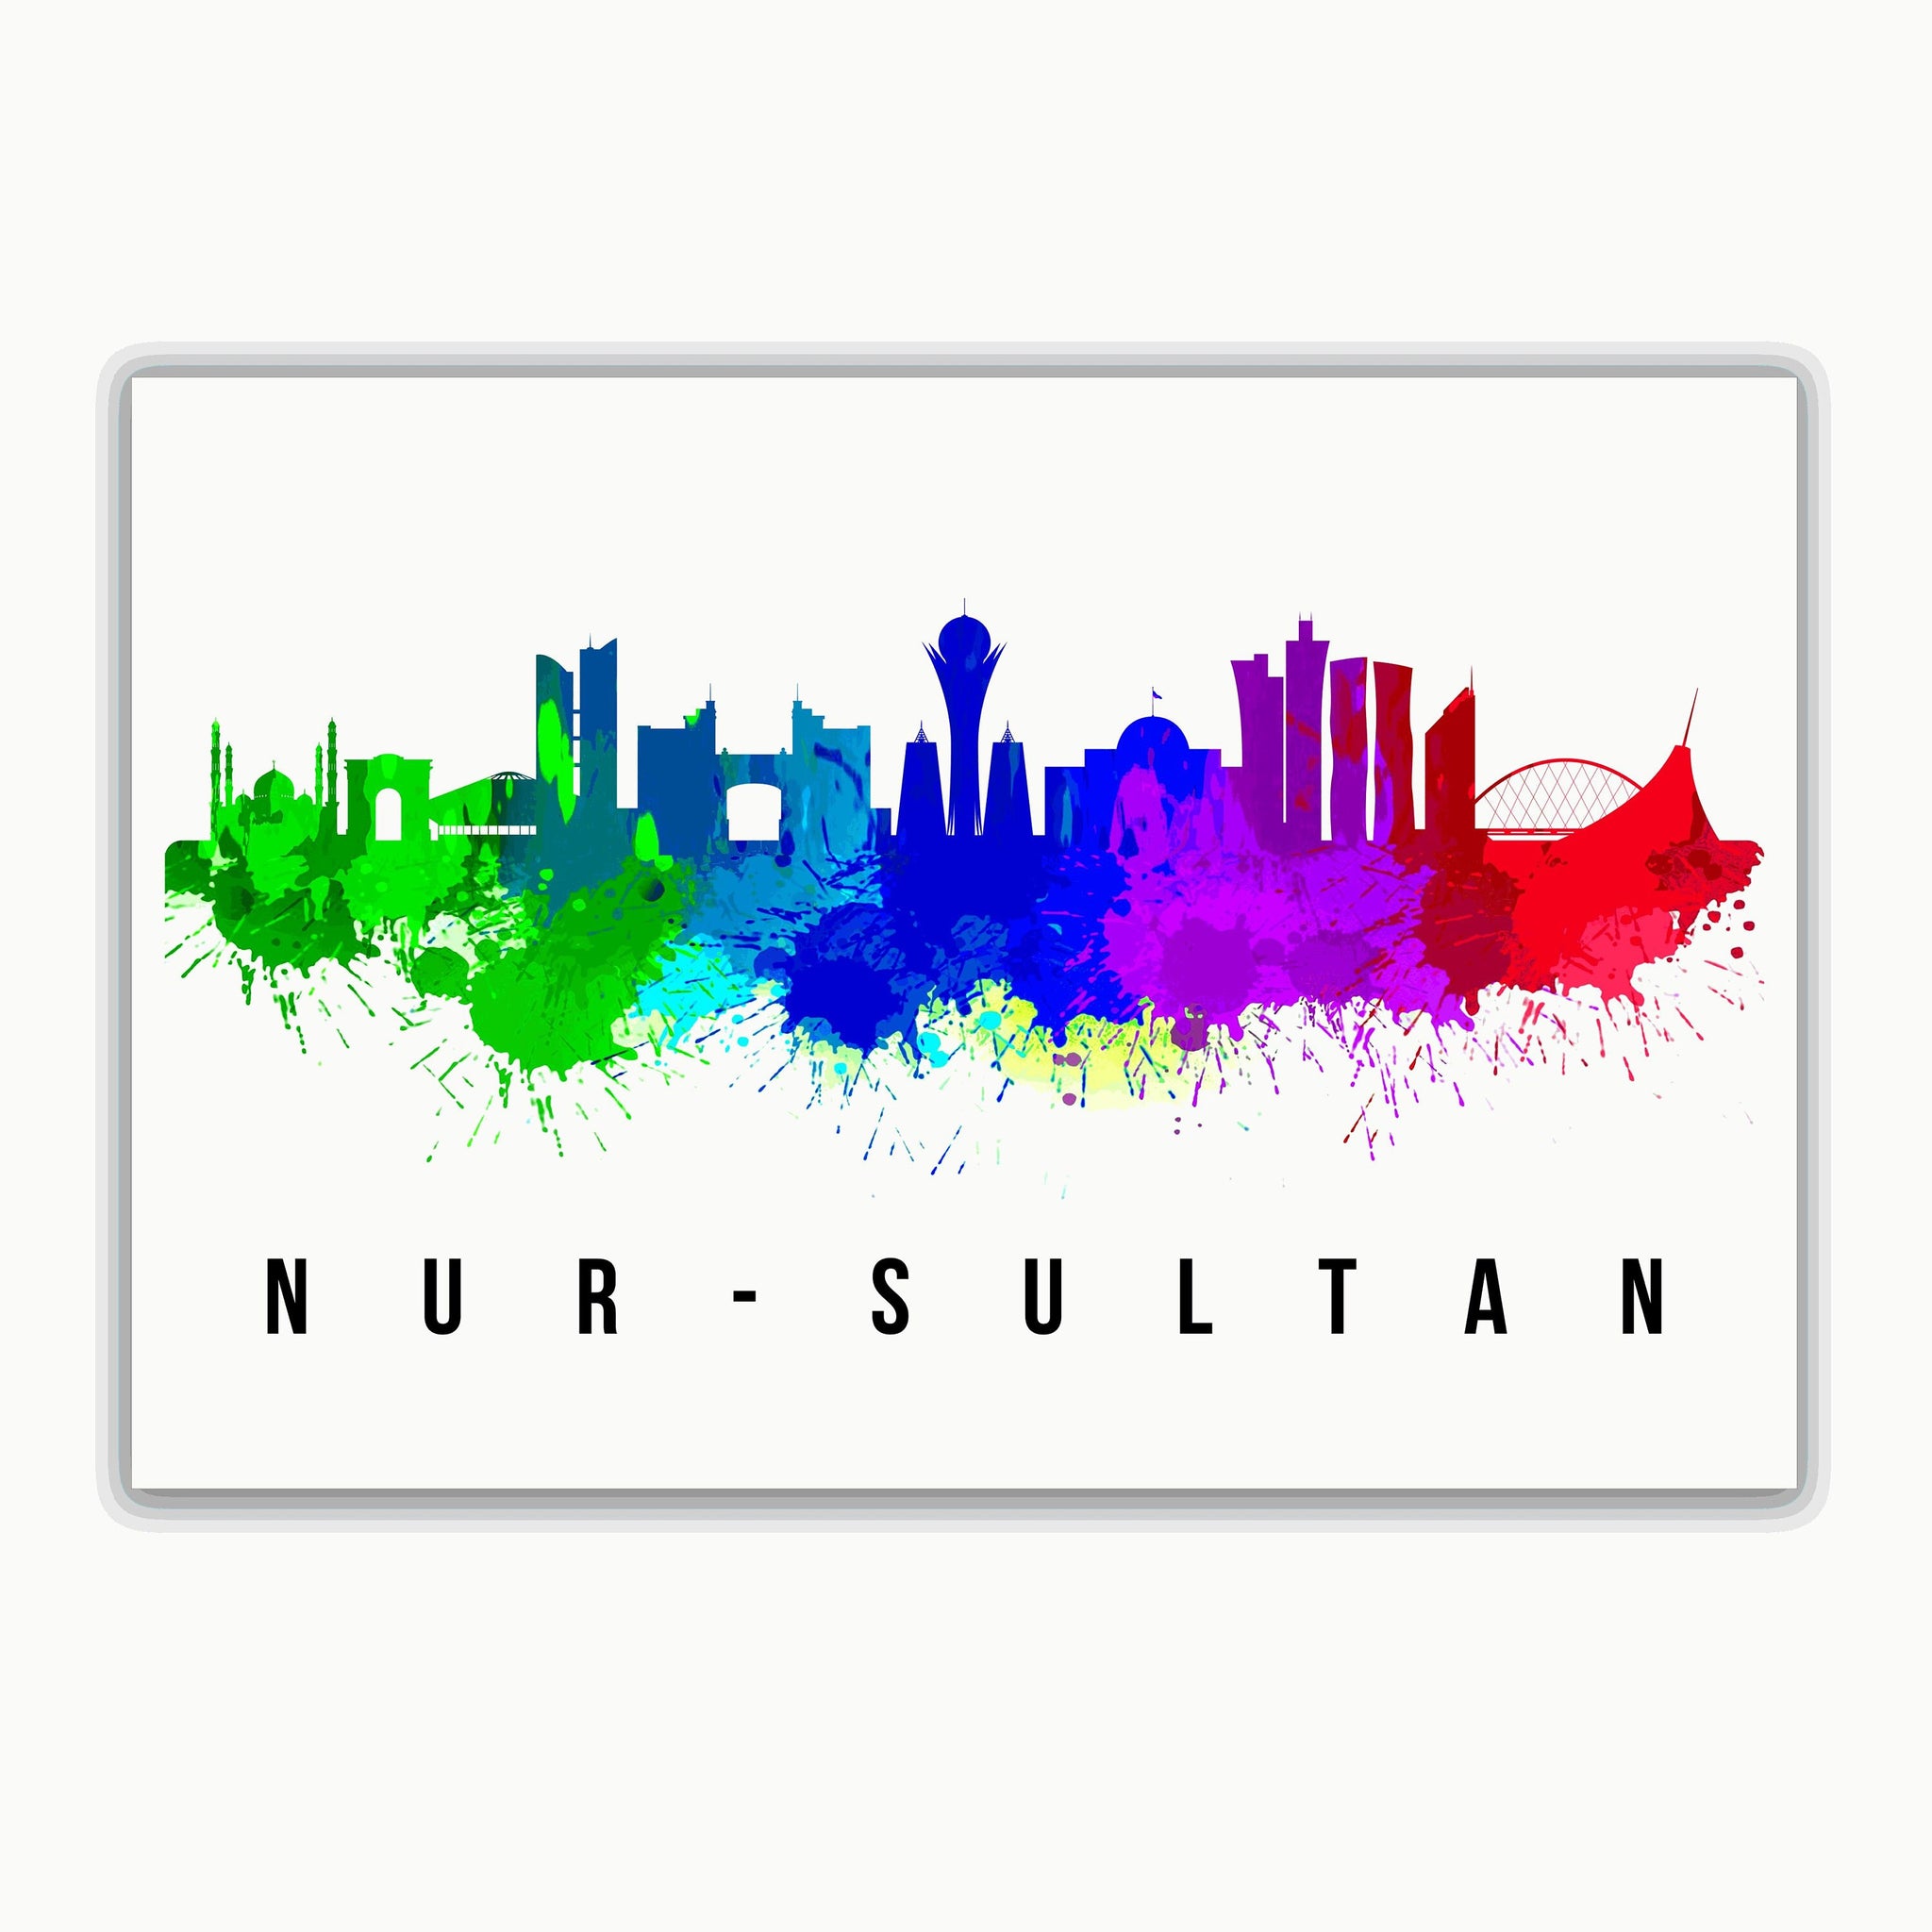 NUR SULTAN - KAZAKHSTAN Poster,  Skyline Poster Cityscape and Landmark Print, Nur Sultan Illustration Home Wall Art, Office Decor